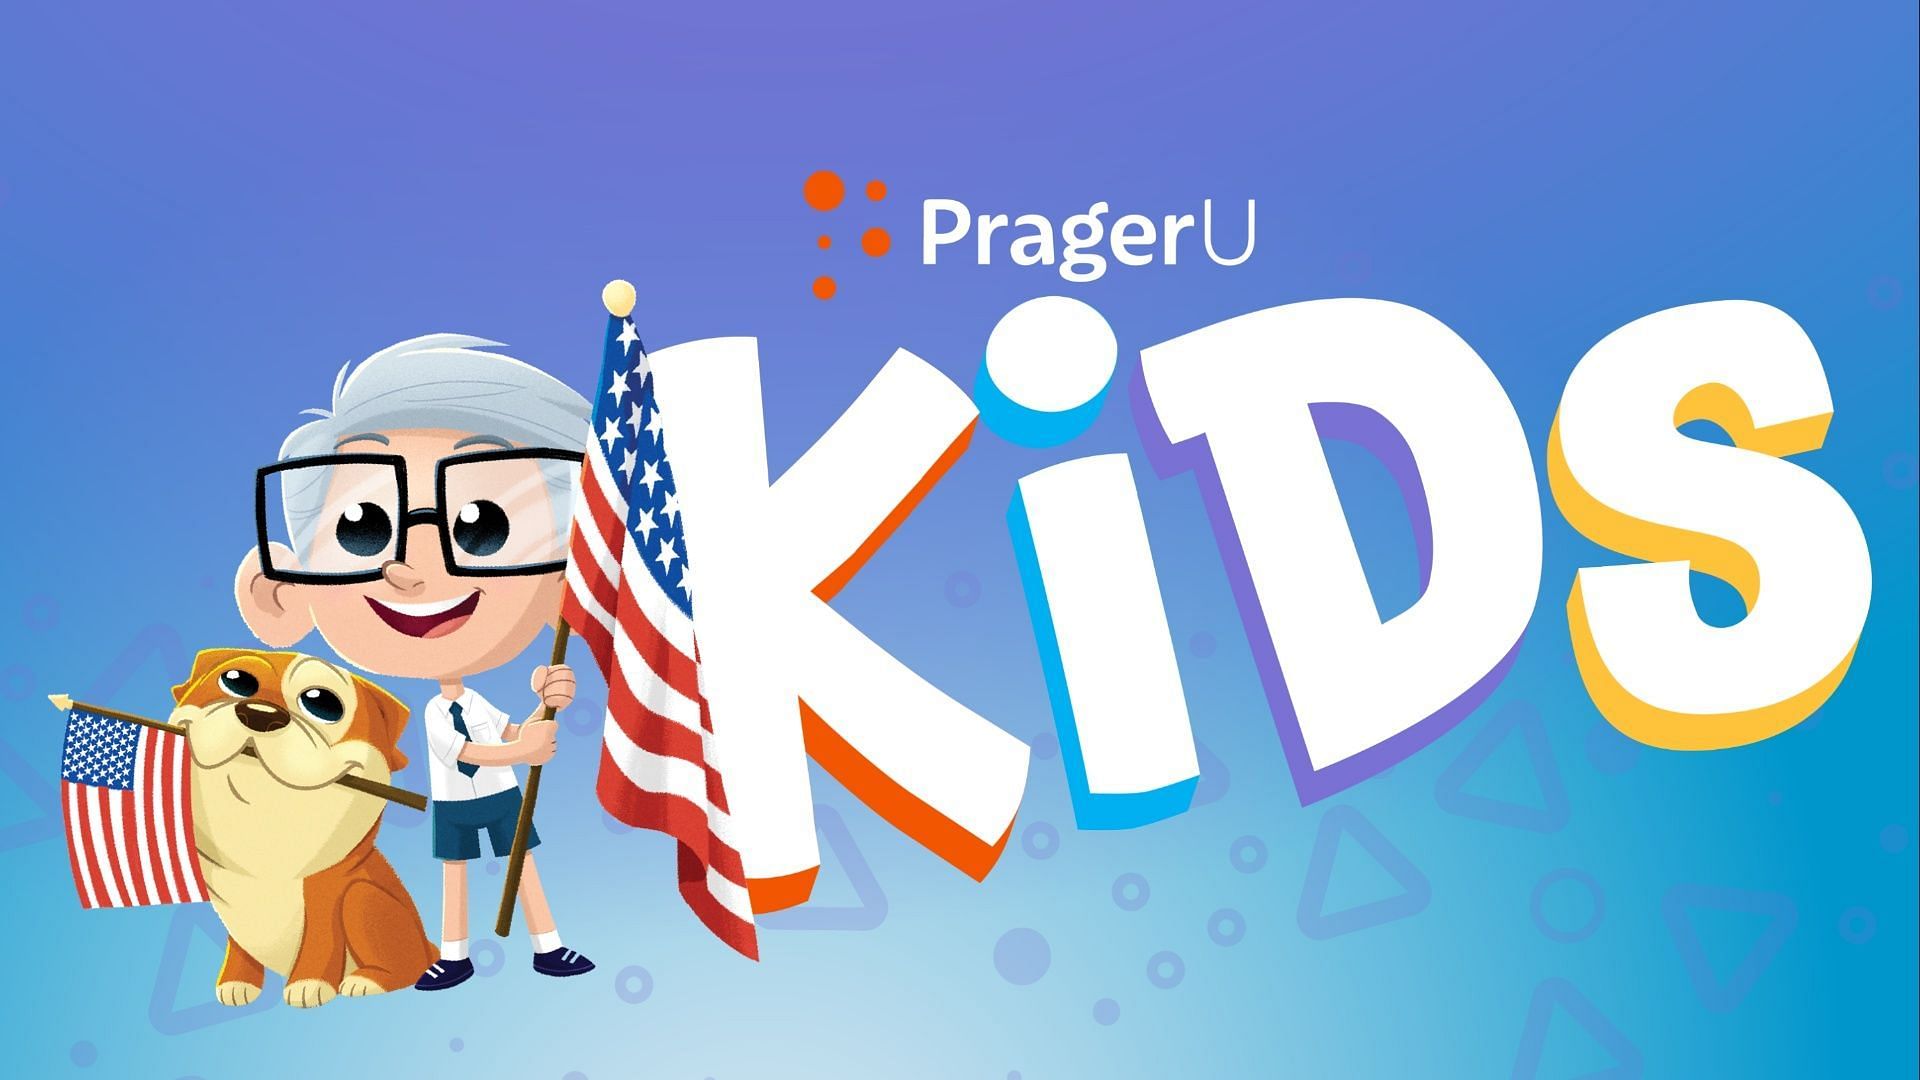 PragerU content will now be available across Florida schools. (Image via YouTube/PragerU)